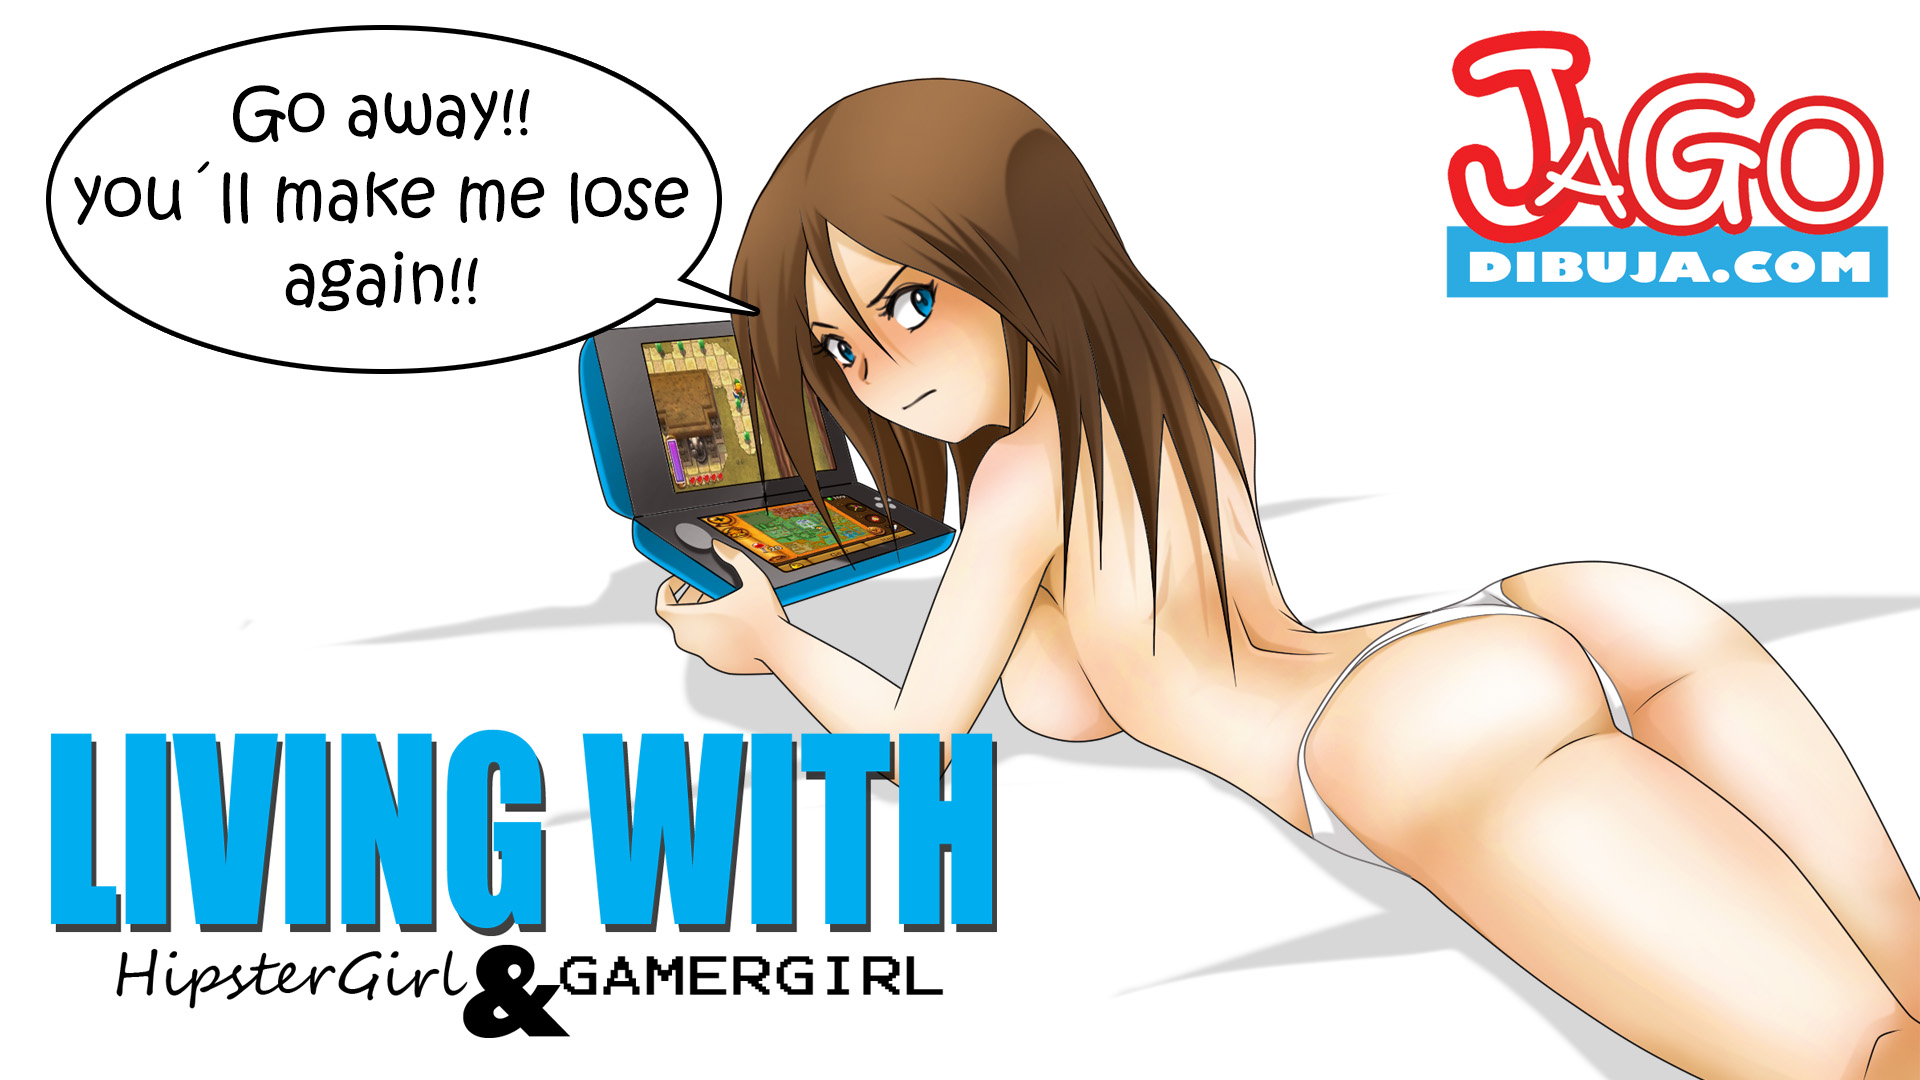 Nude gamer girl calendar - Quality porn